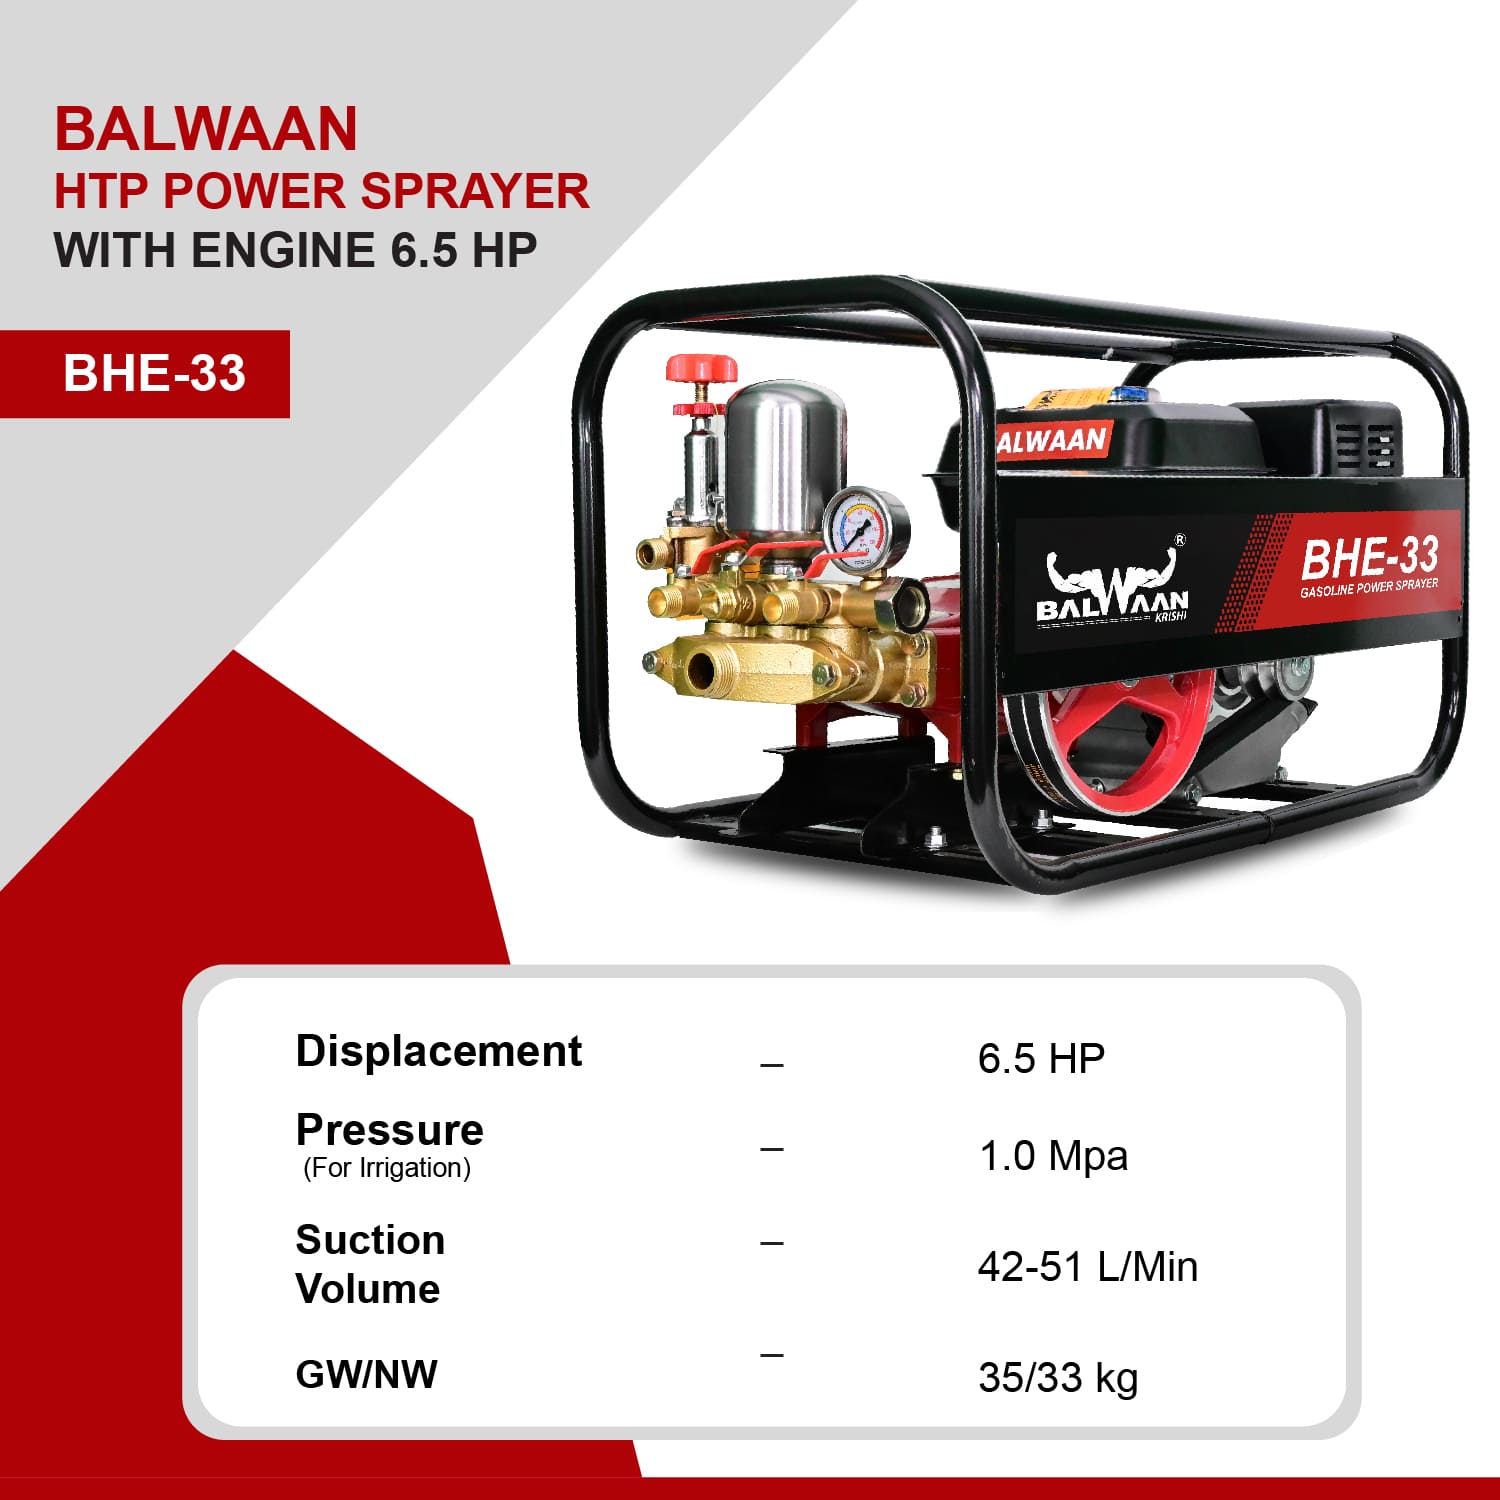 Balwaan 33 No. HTP Sprayer with 6.5HP Engine & 50 Mtr. Hose|BHE-33